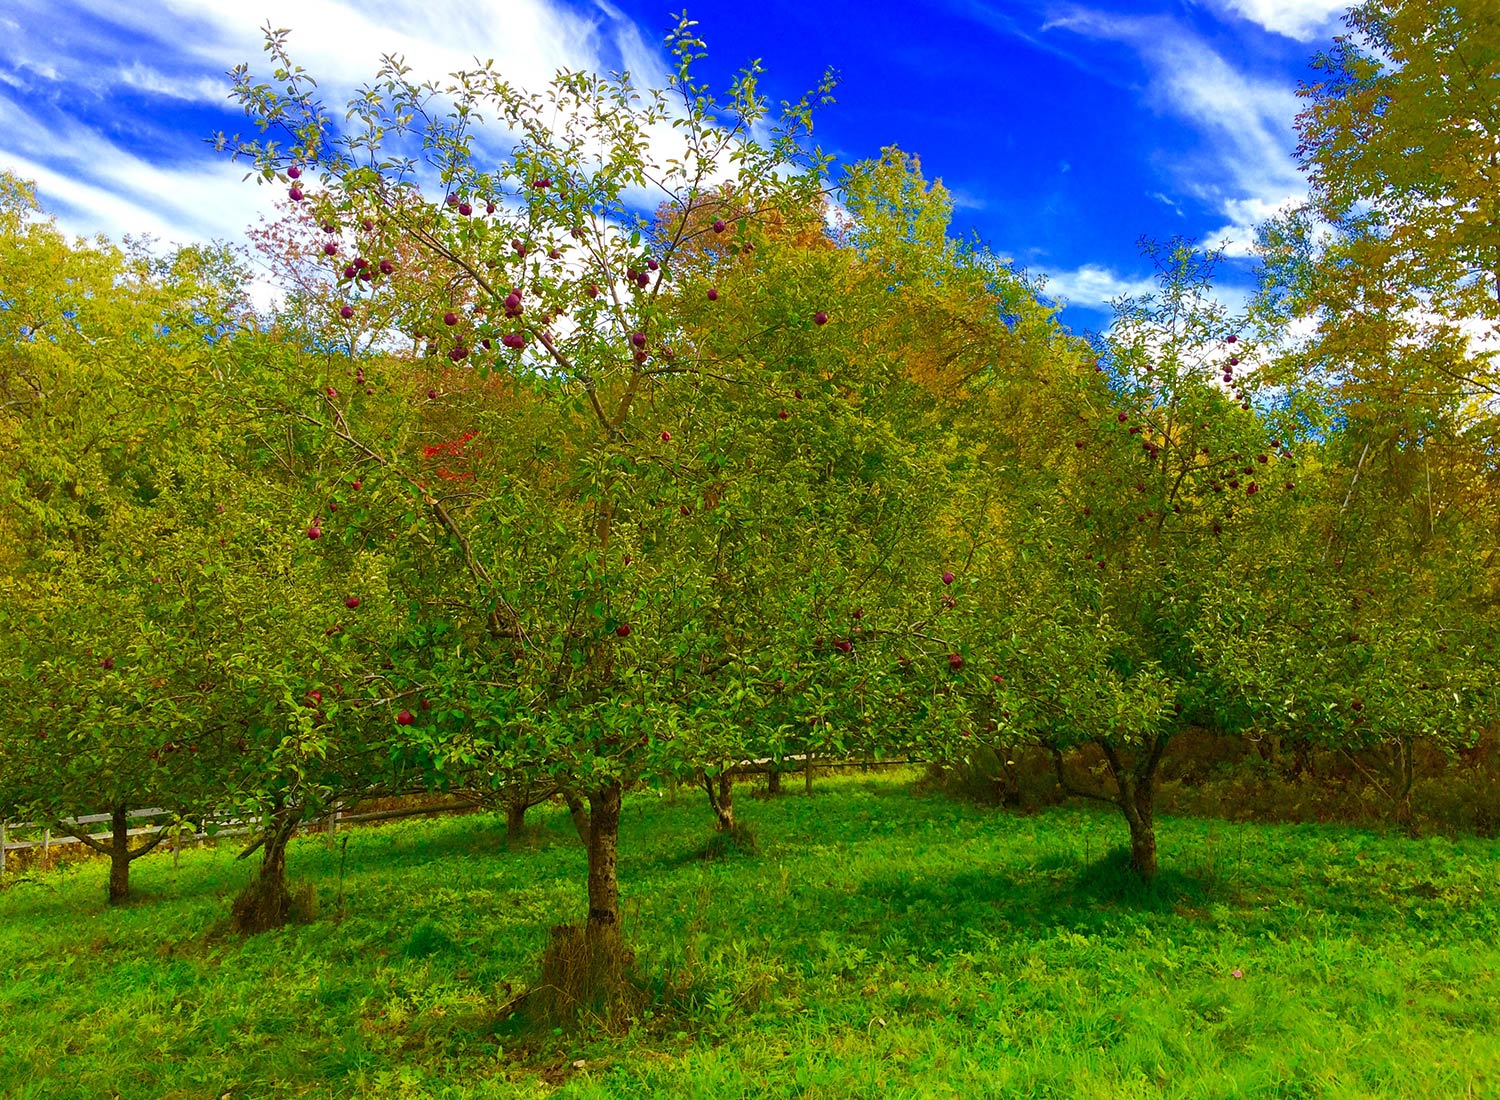 SHO Farm: vegan wild farming in a cold climate | fall apple harvest